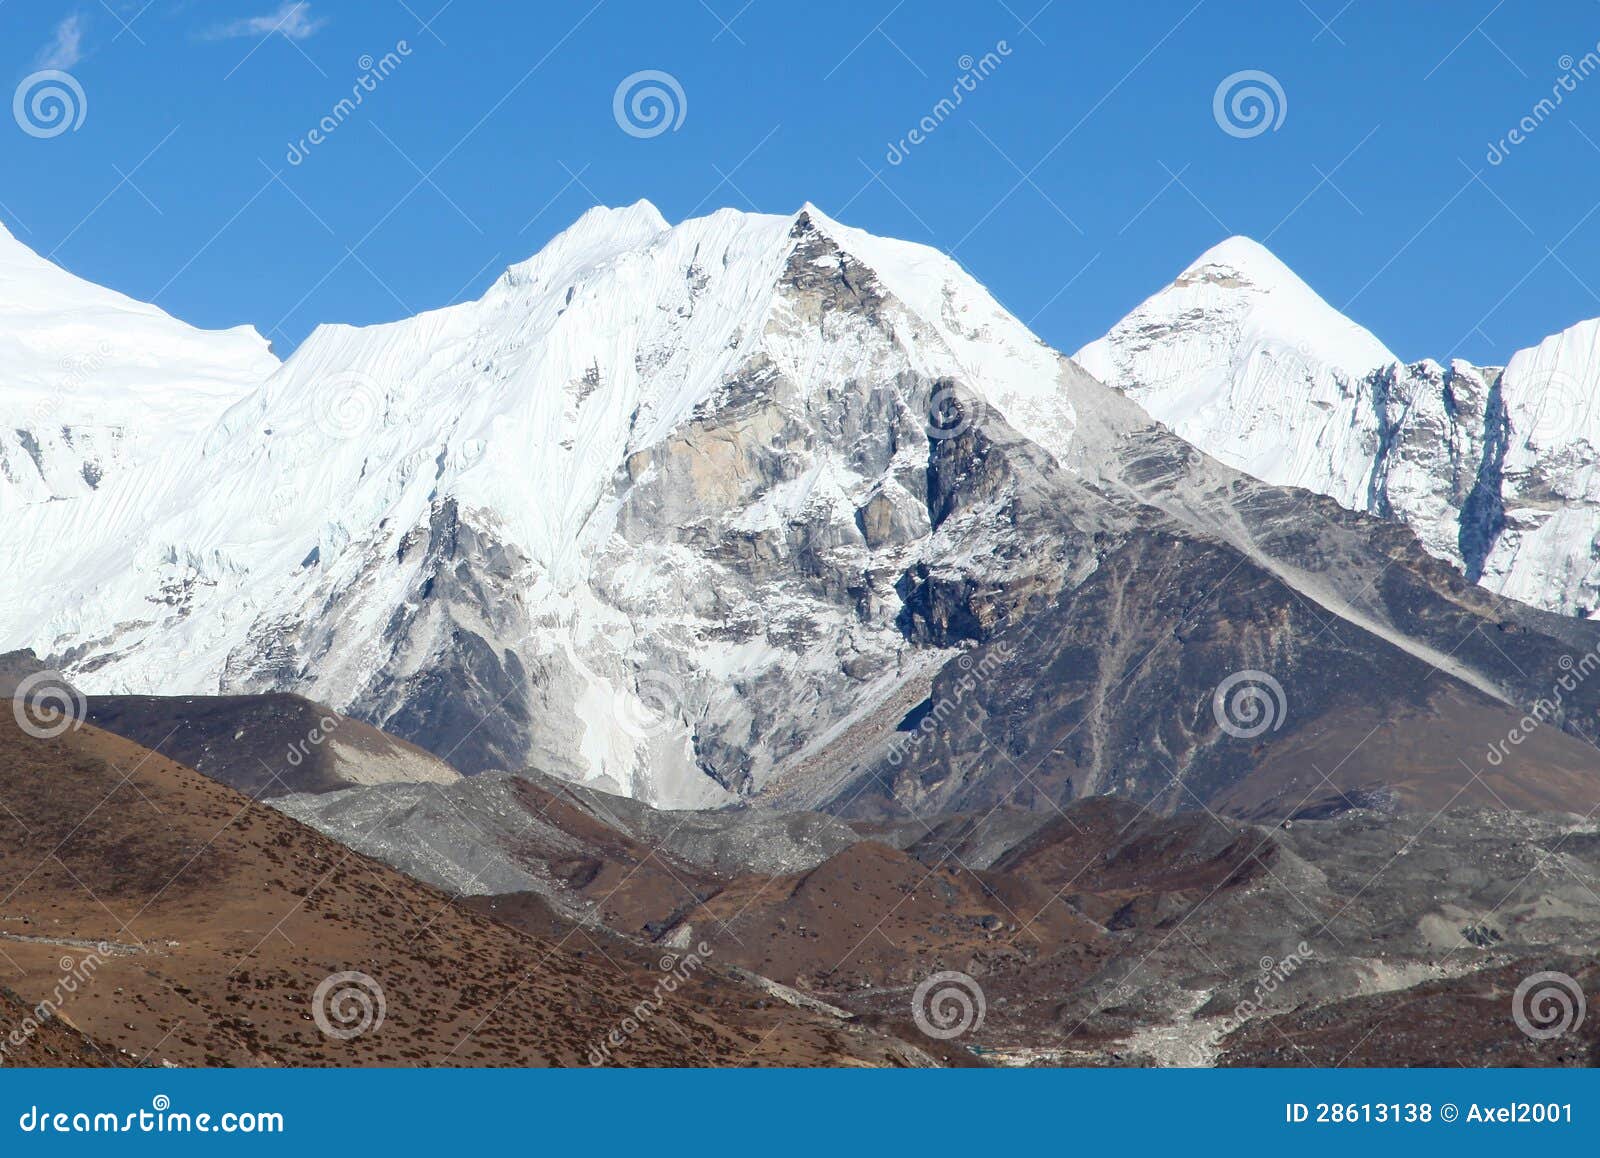 island peak (imja tse) - popular climbing mountain in nepal